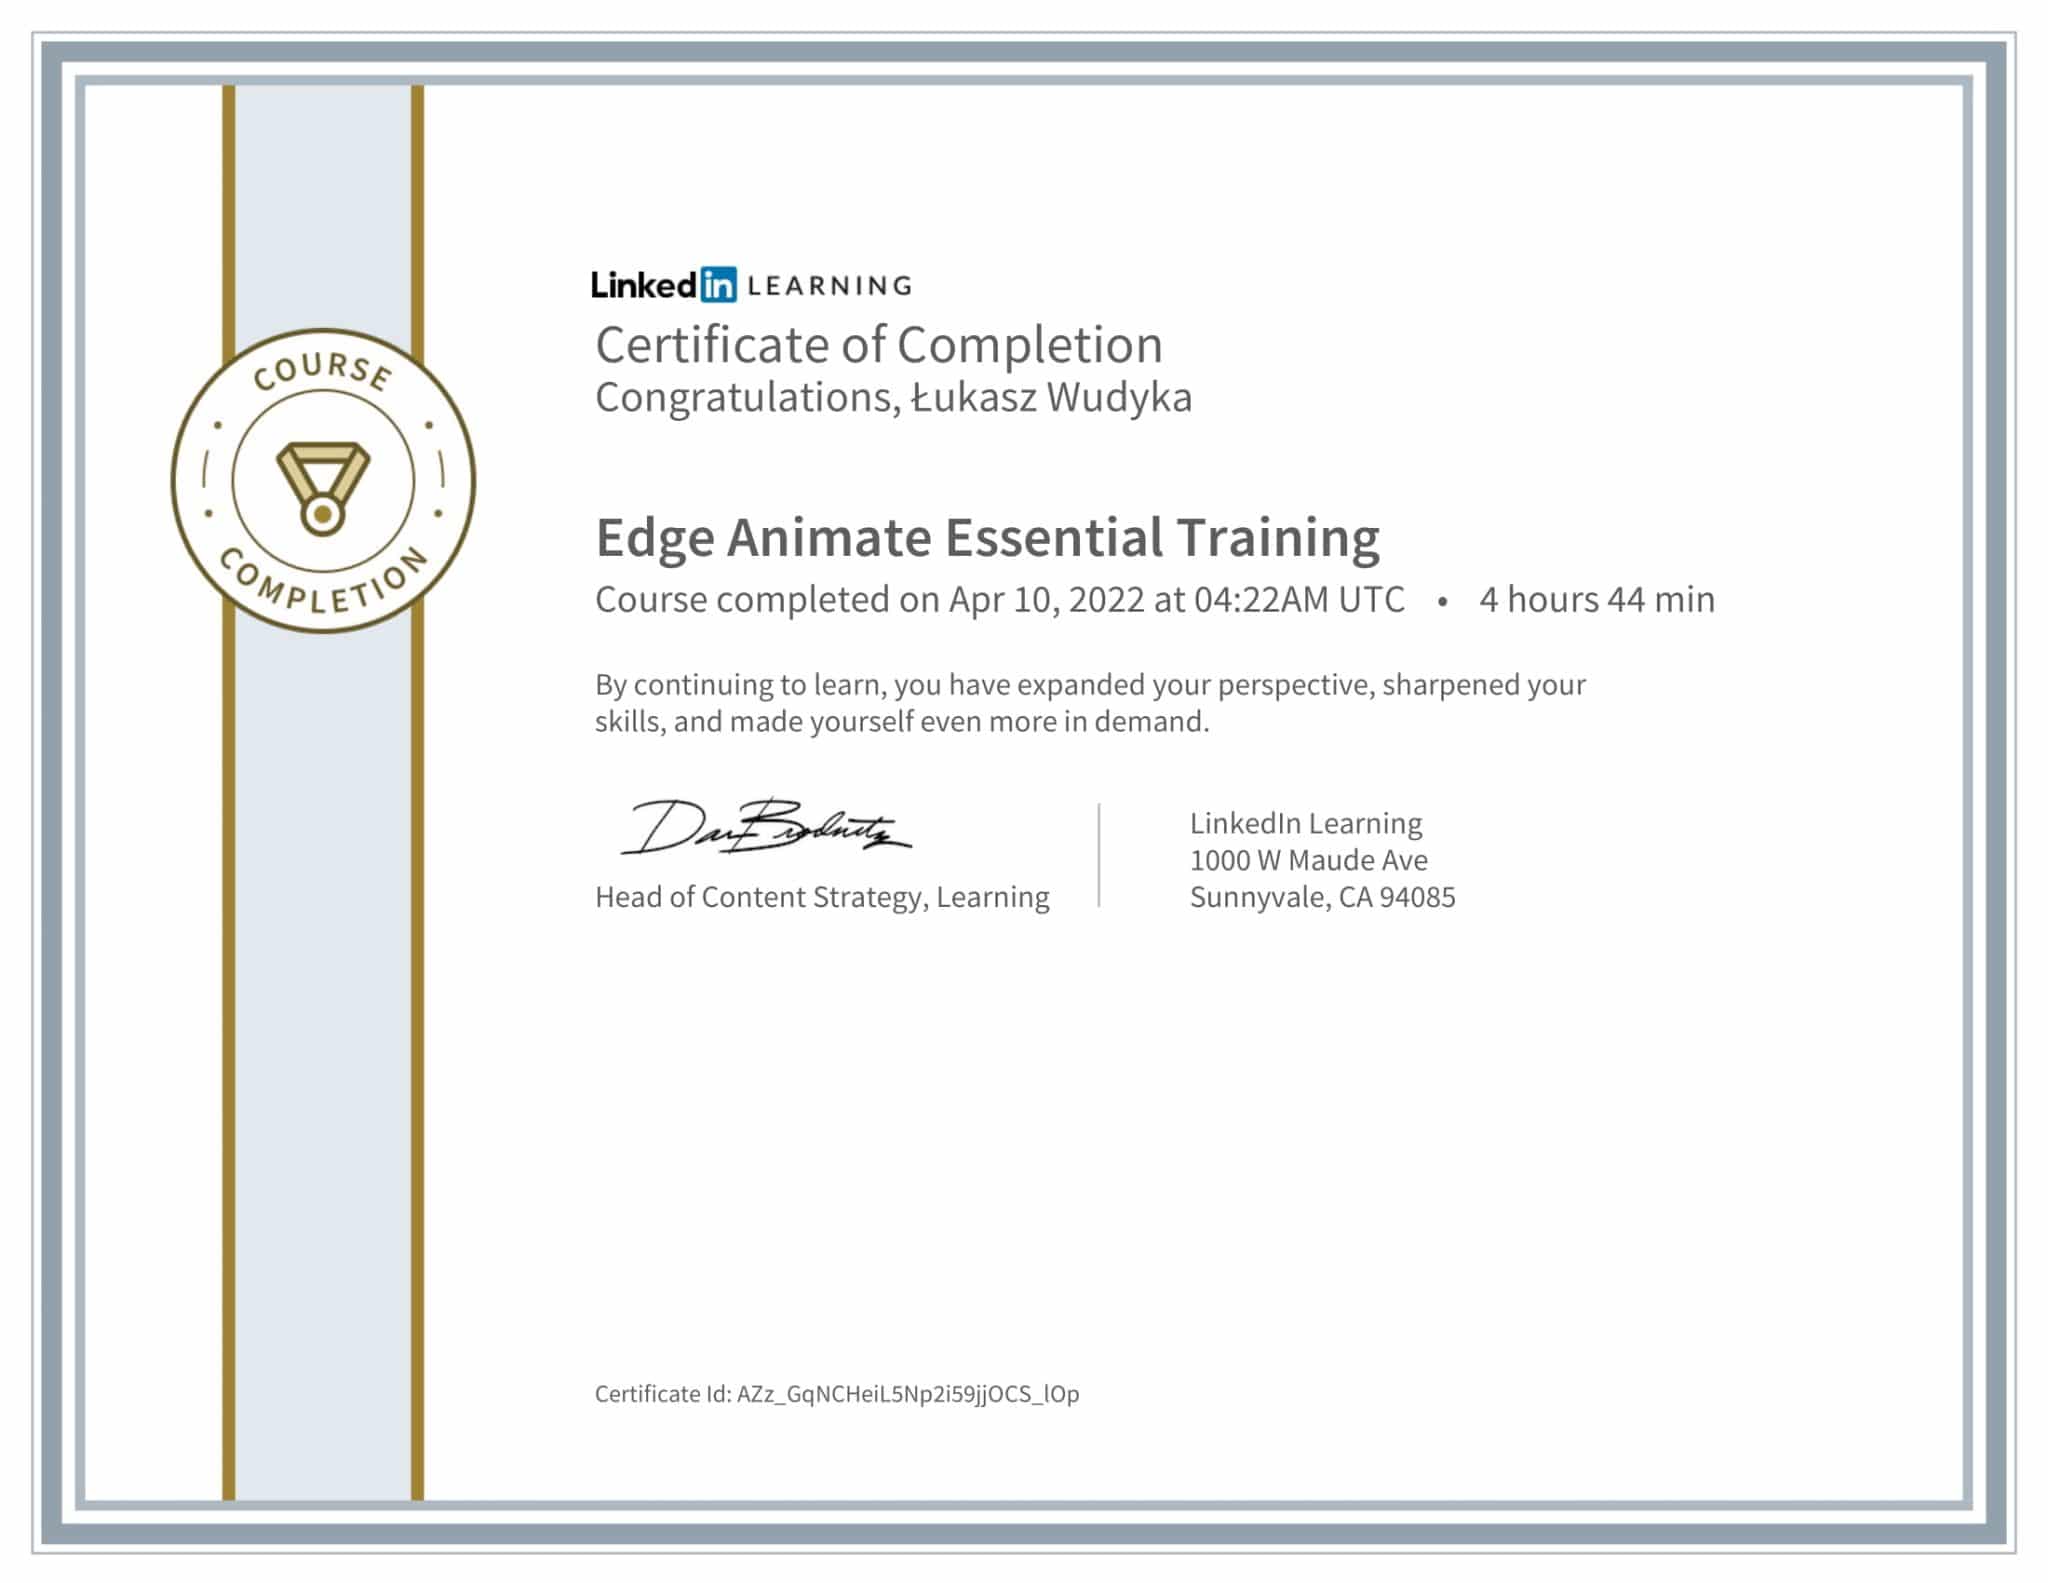 CertificateOfCompletion_Edge Animate Essential Training-1